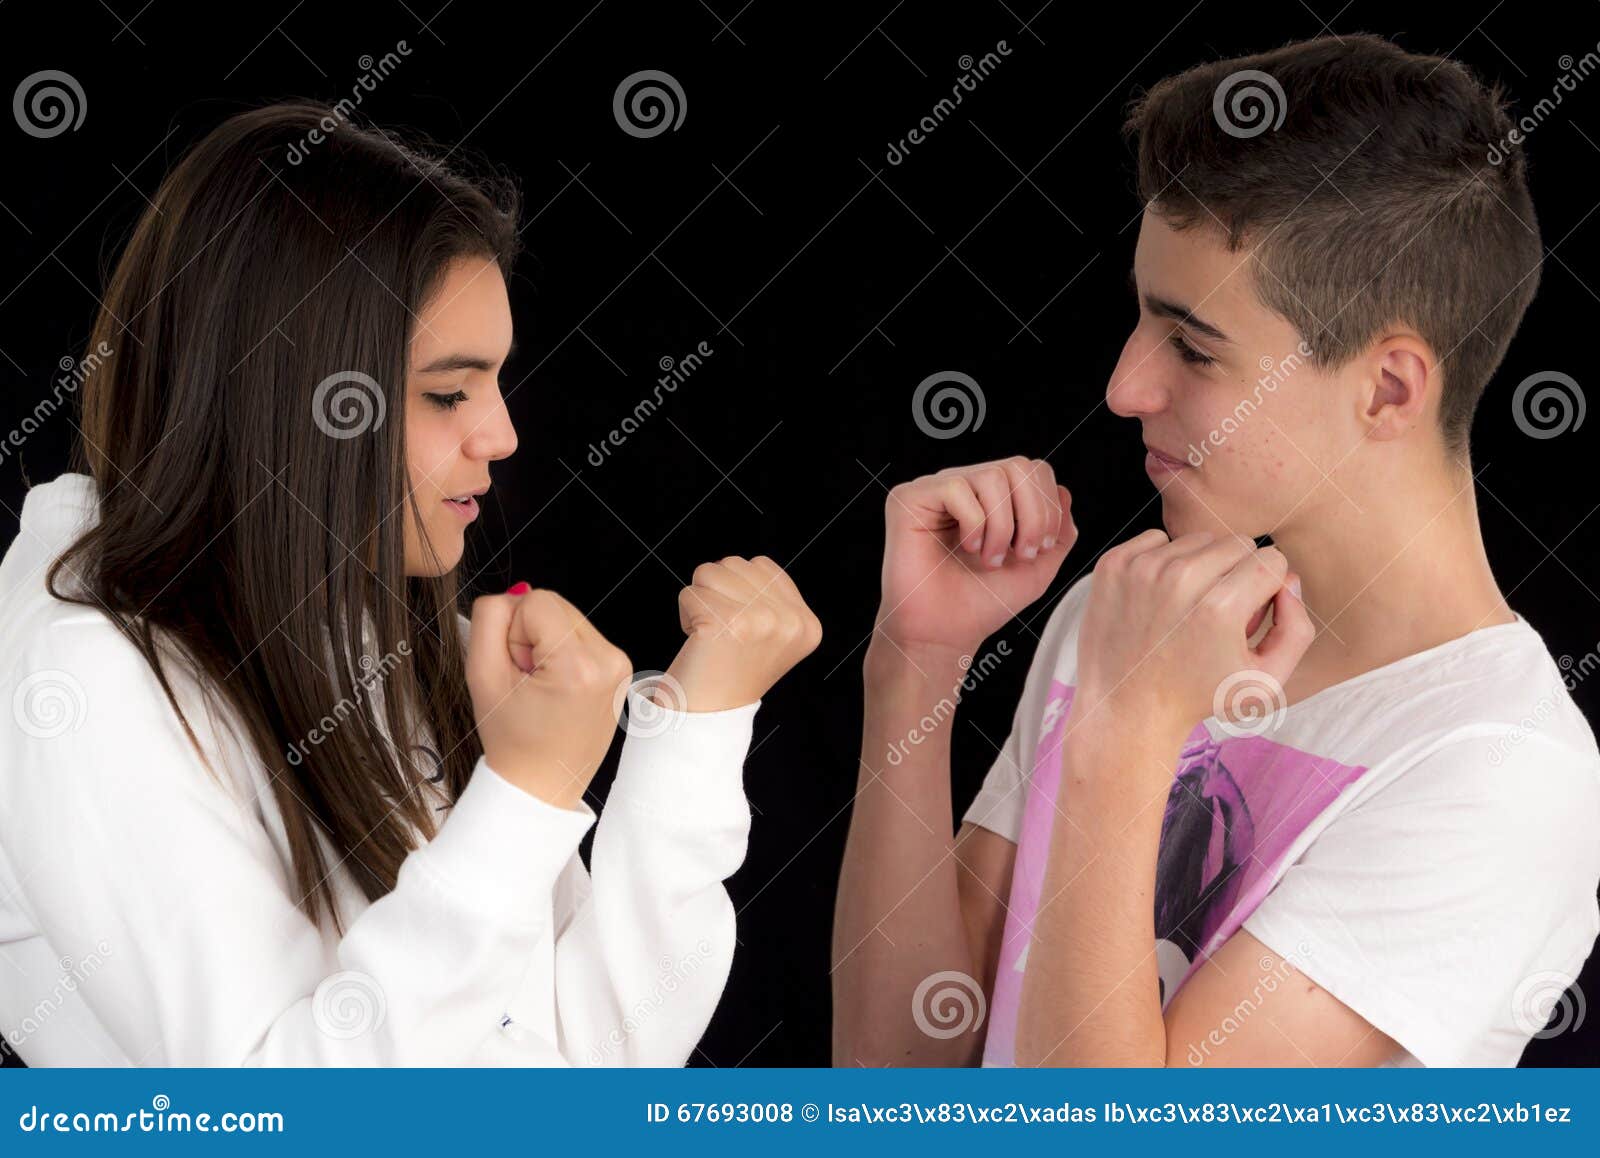 teenage couple imitating a fight